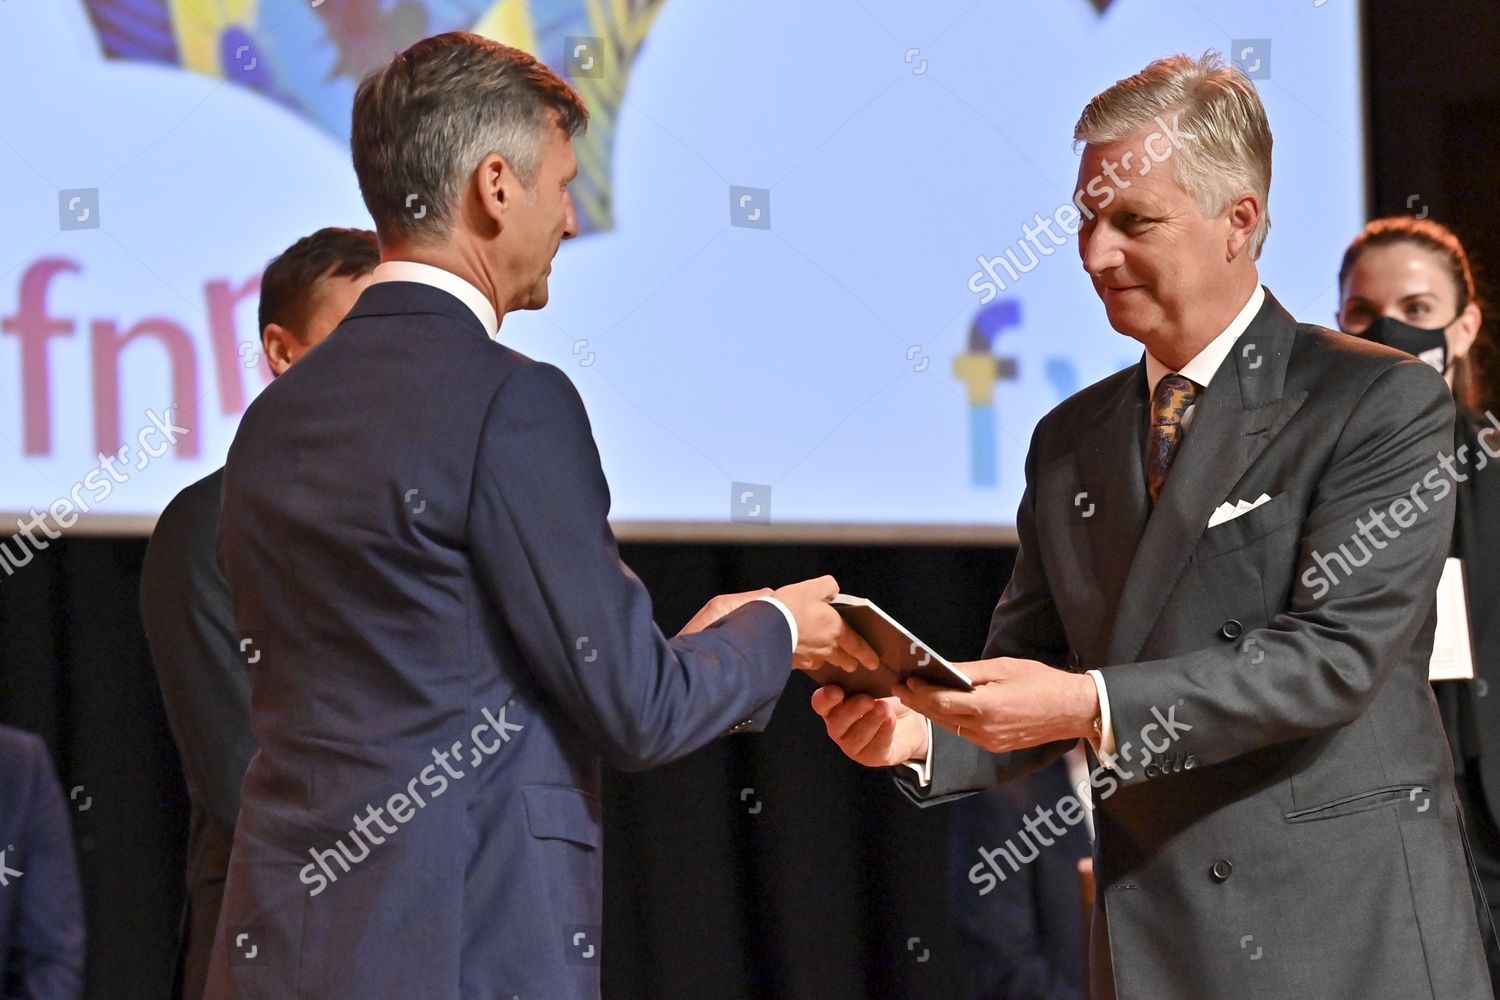 science-royals-scientific-excellence-awards-brussels-belgium-shutterstock-editorial-12523234e.jpg